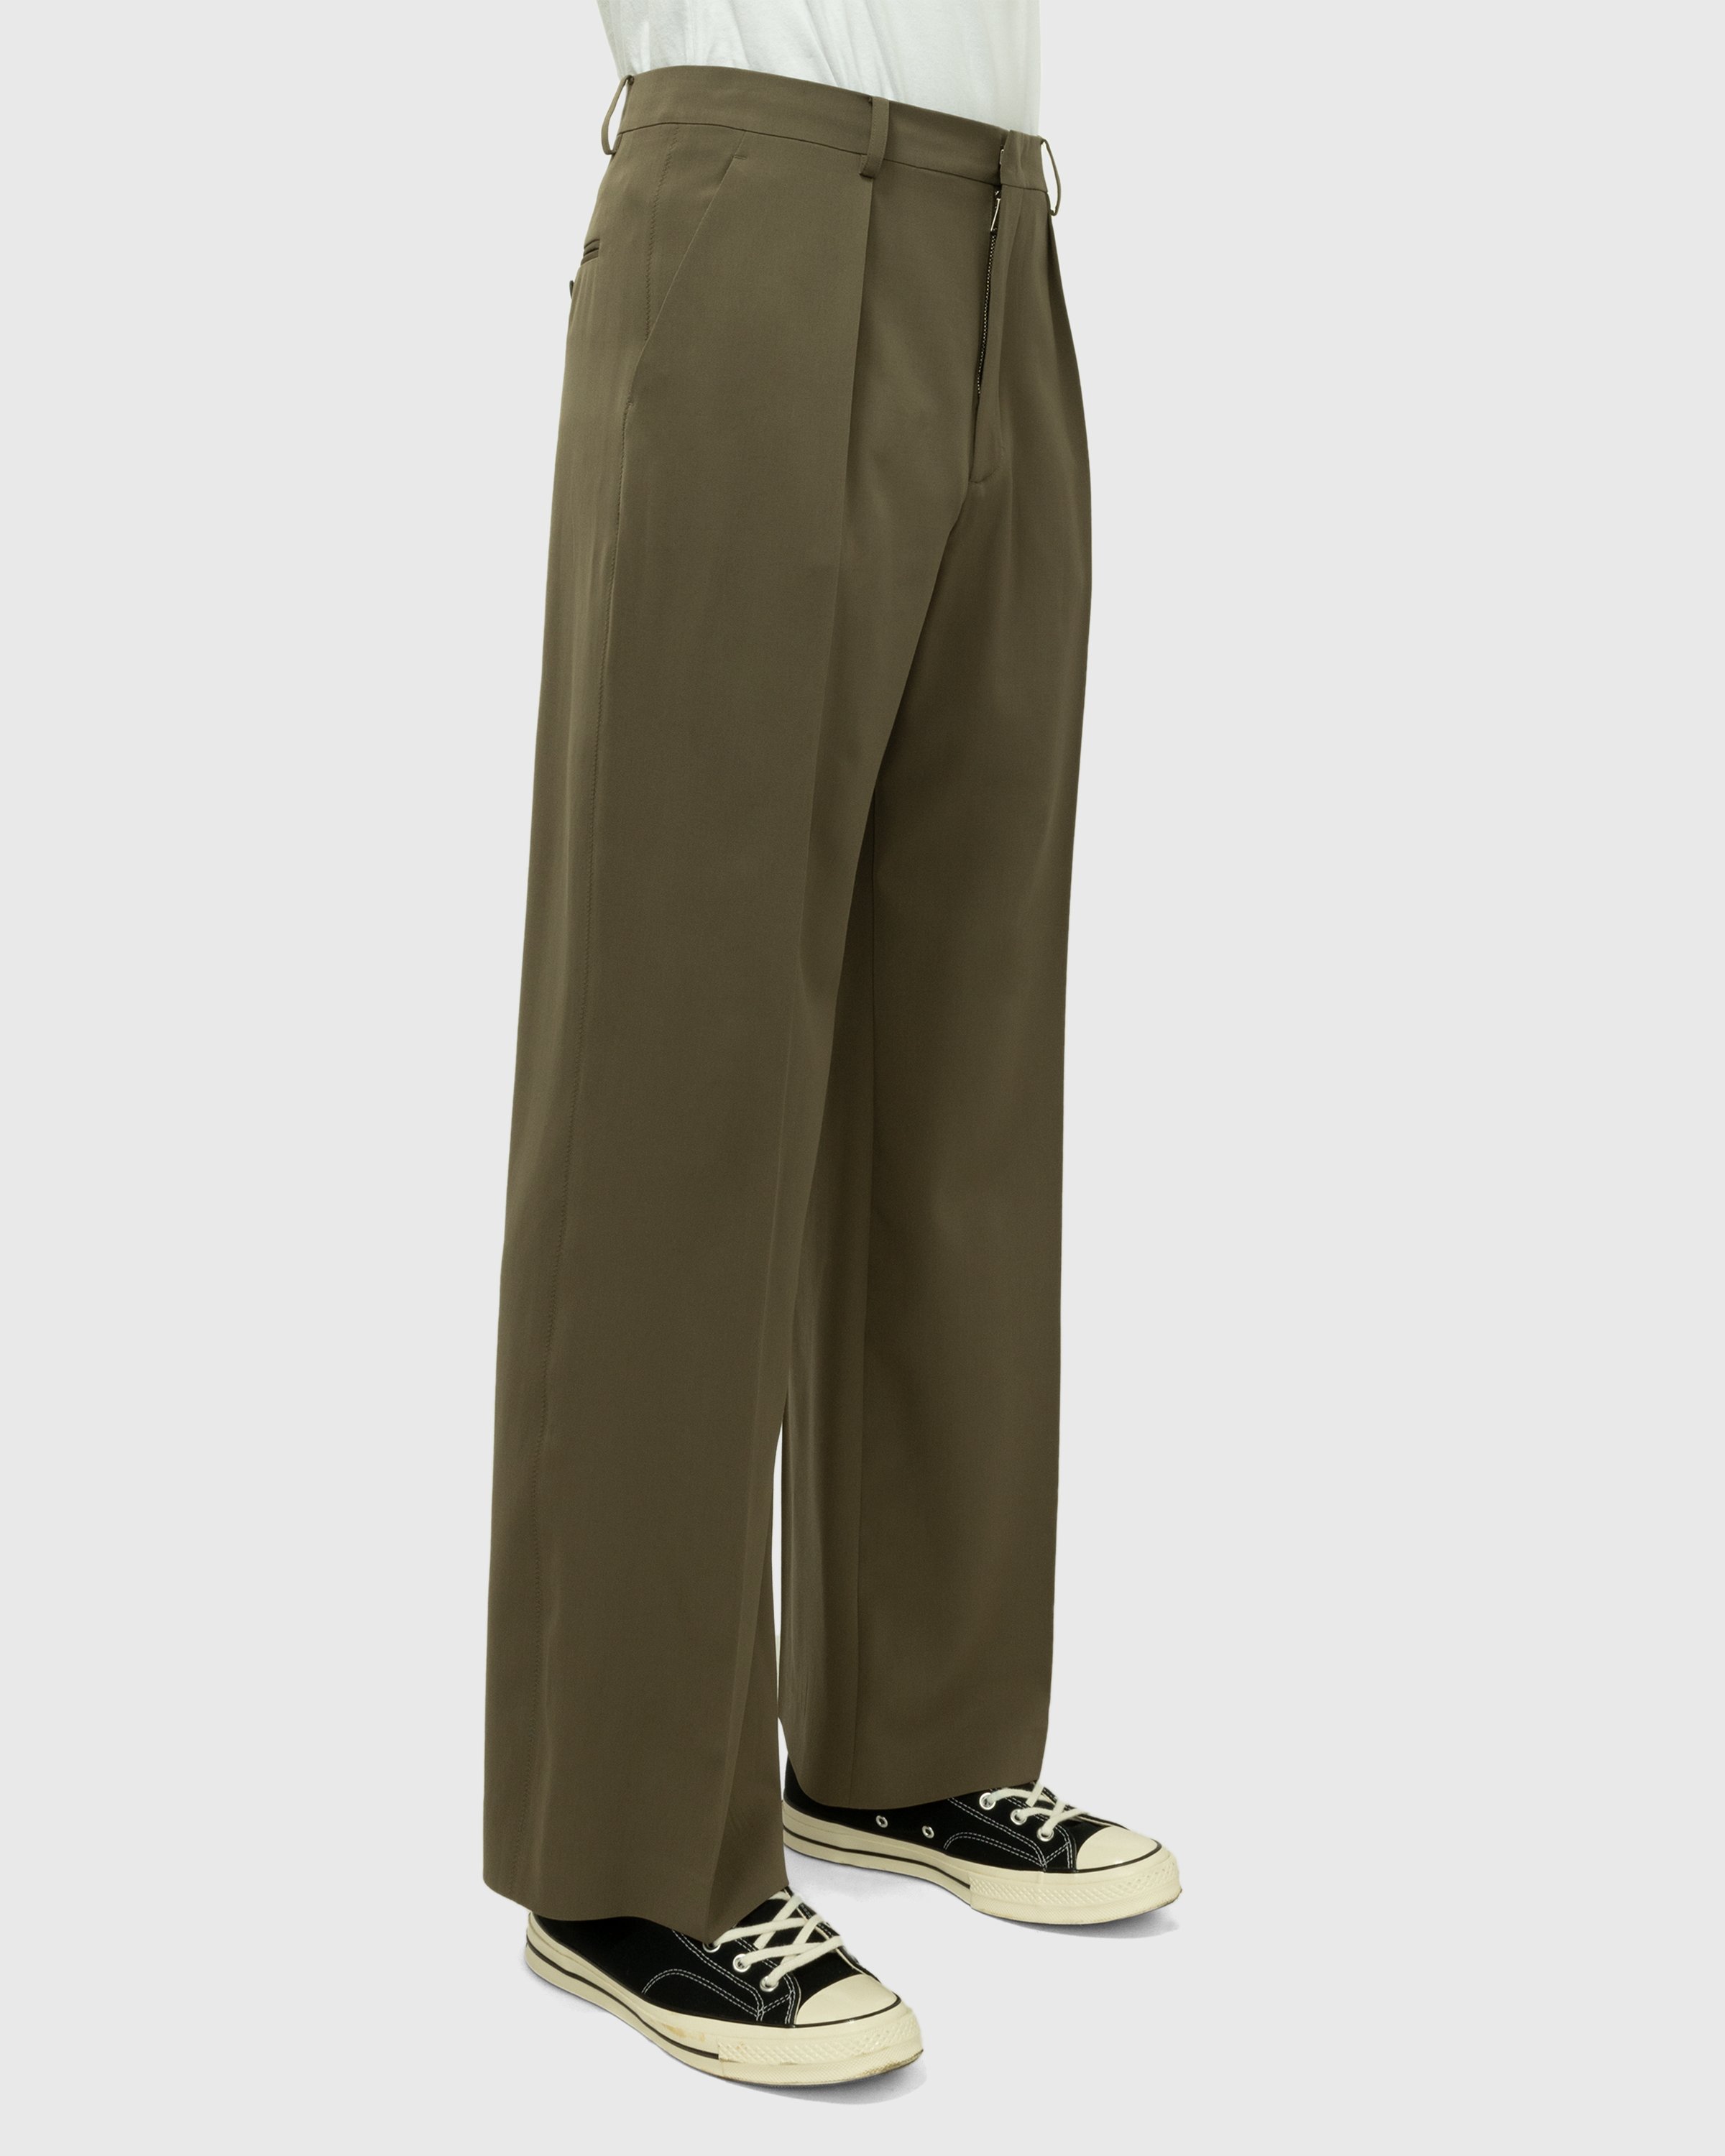 Jean Paul Gaultier - Classic Woven Trouser Khaki - Clothing - Brown - Image 4